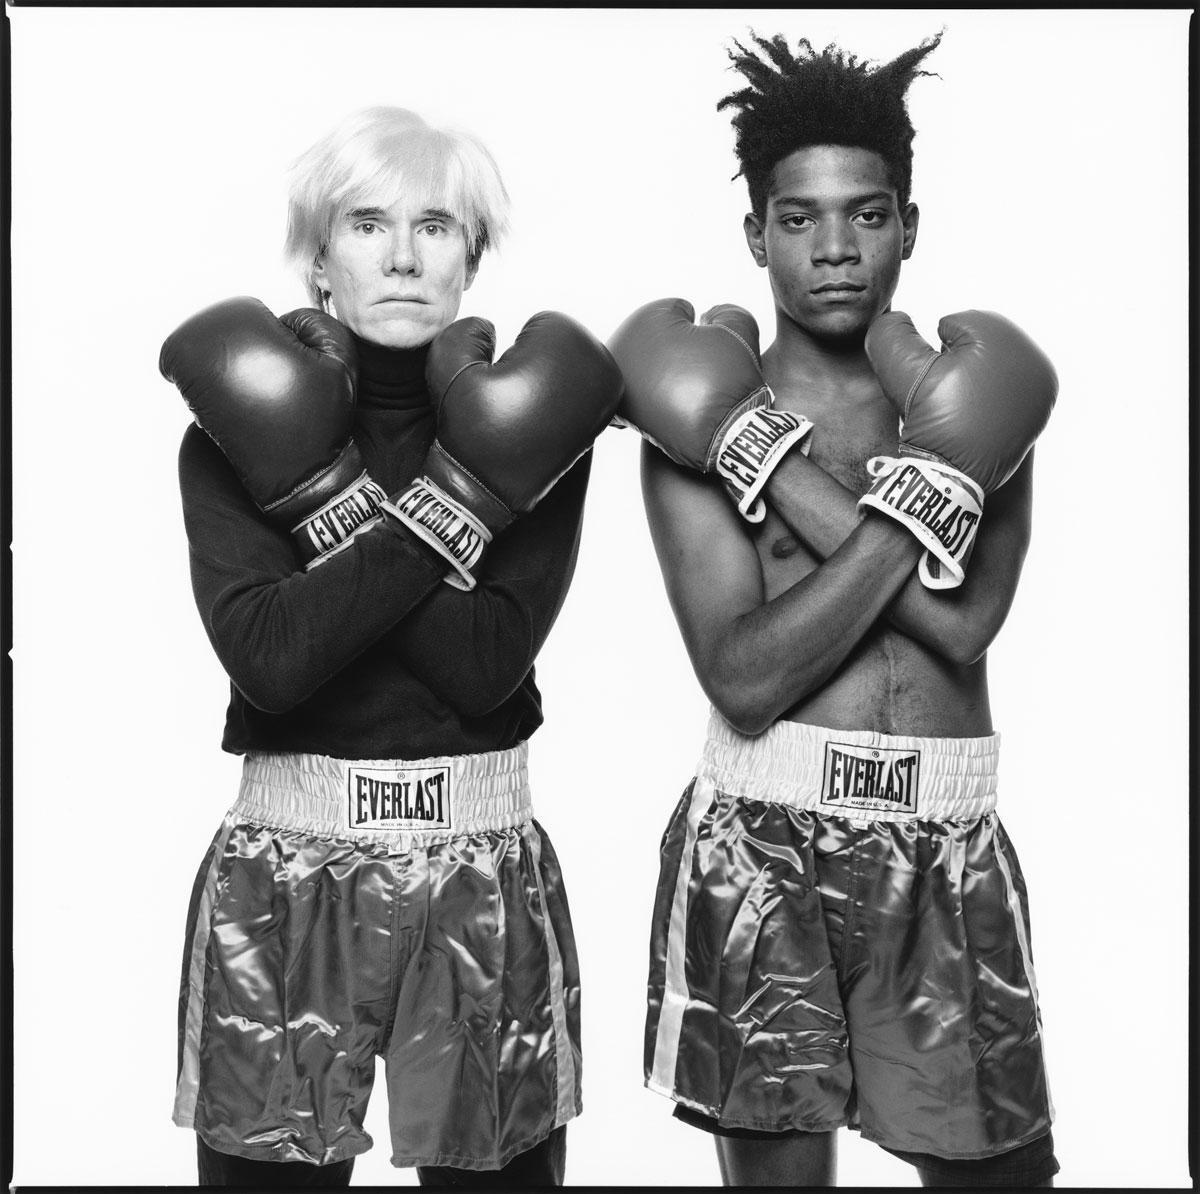 Michael Halsband, Andy Warhol and Jean-Michel Basquiat #143, New York City, July 10, 1985 © Michael Halsband